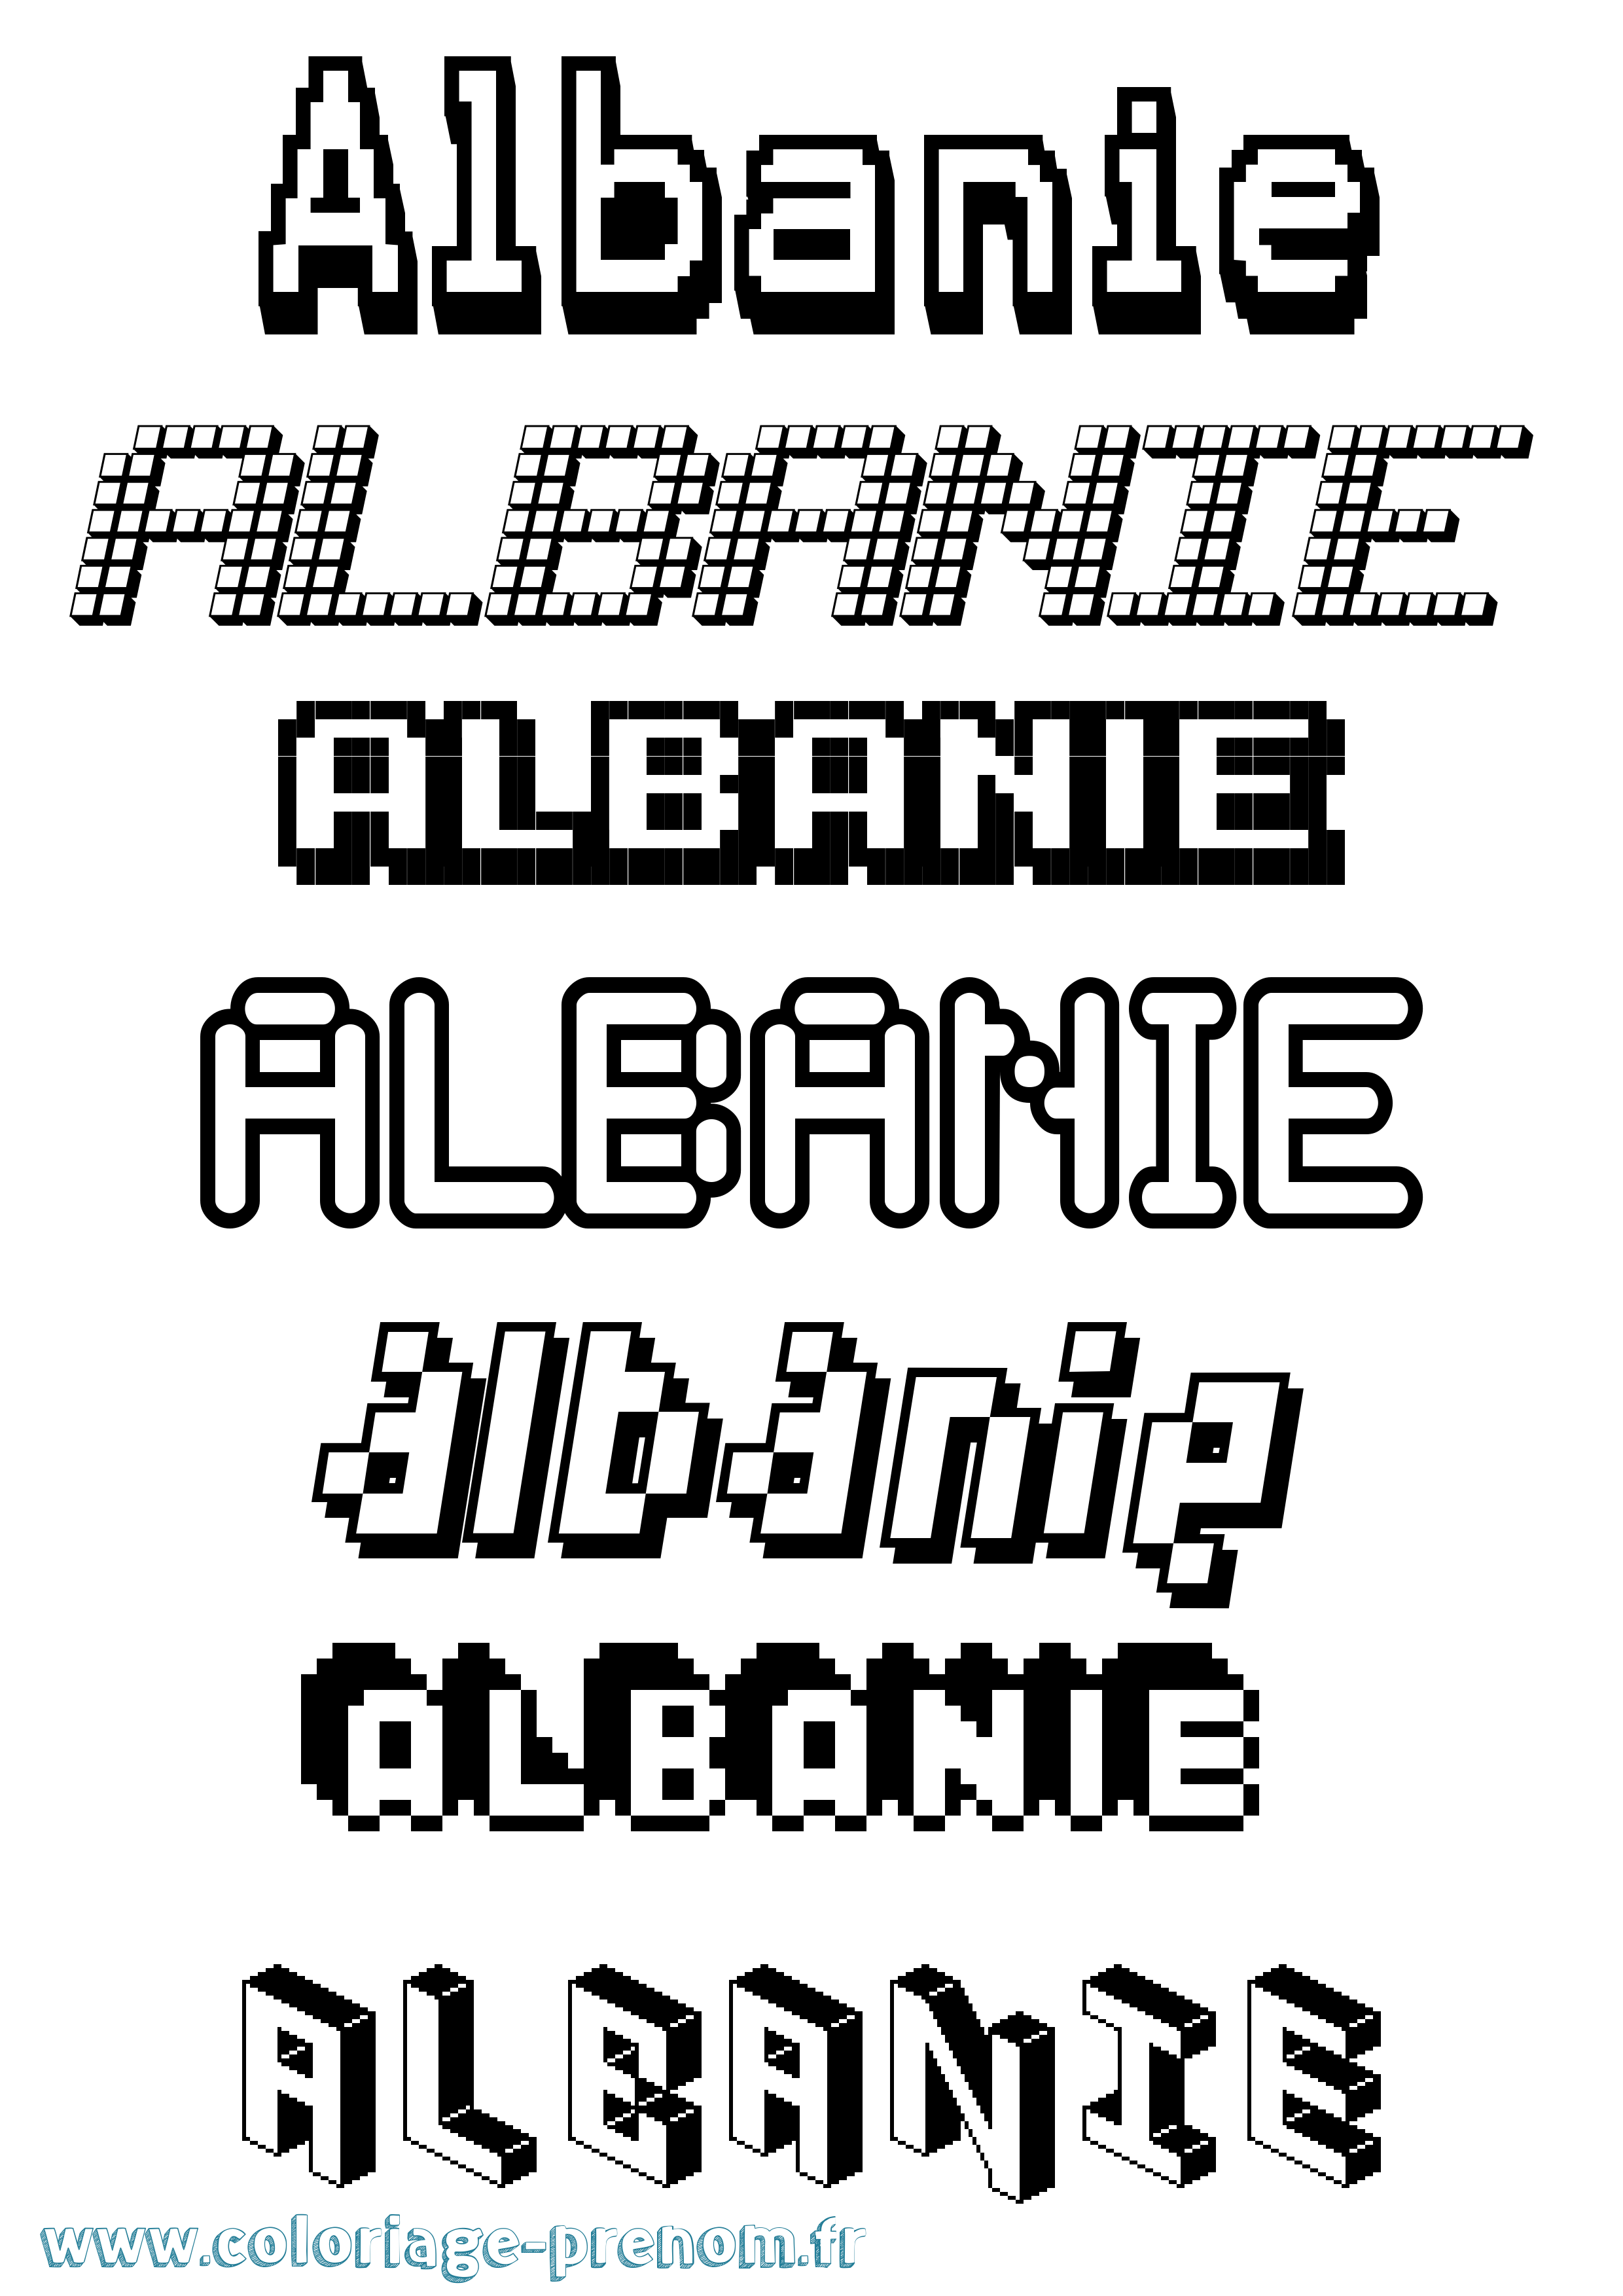 Coloriage prénom Albanie Pixel